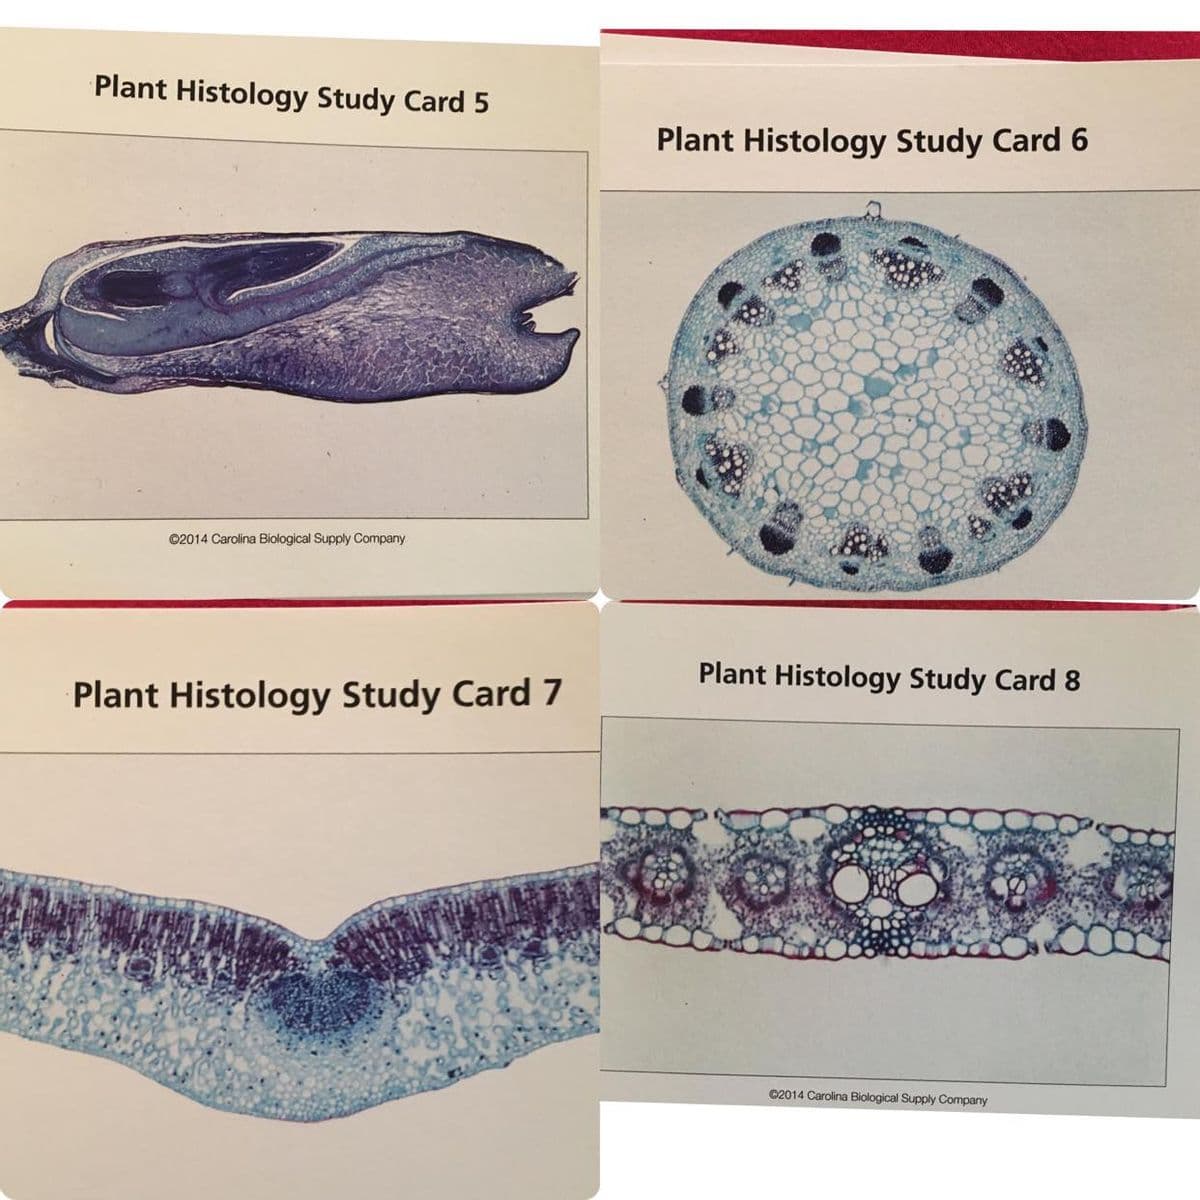 Plant Histology Study Card 5
Plant Histology Study Card 6
©2014 Carolina Biological Supply Company
Plant Histology Study Card 8
Plant Histology Study Card 7
©2014 Carolina Biological Supply Company
